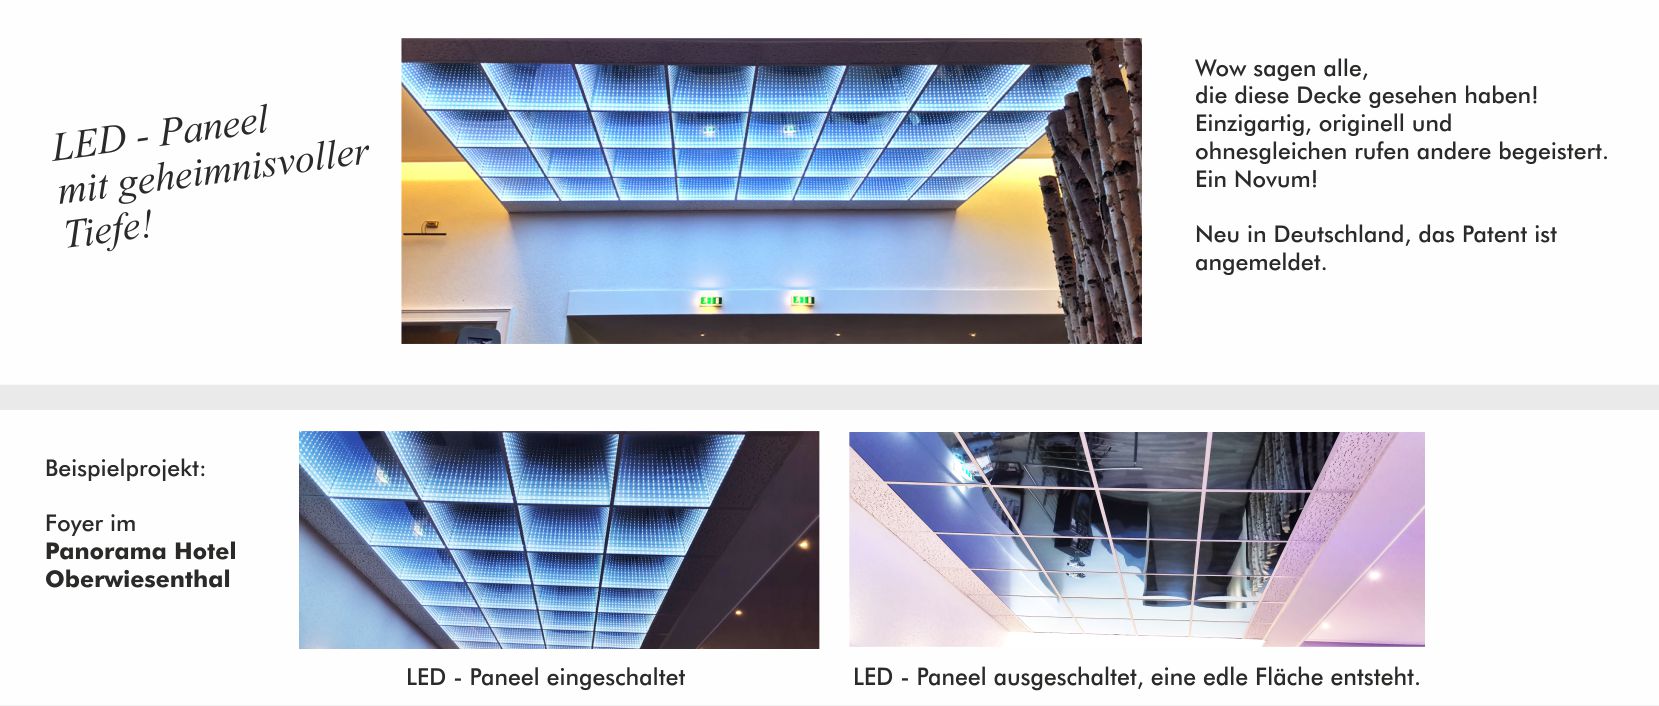 LED-Paneele mit geheimnisvoller Tiefe